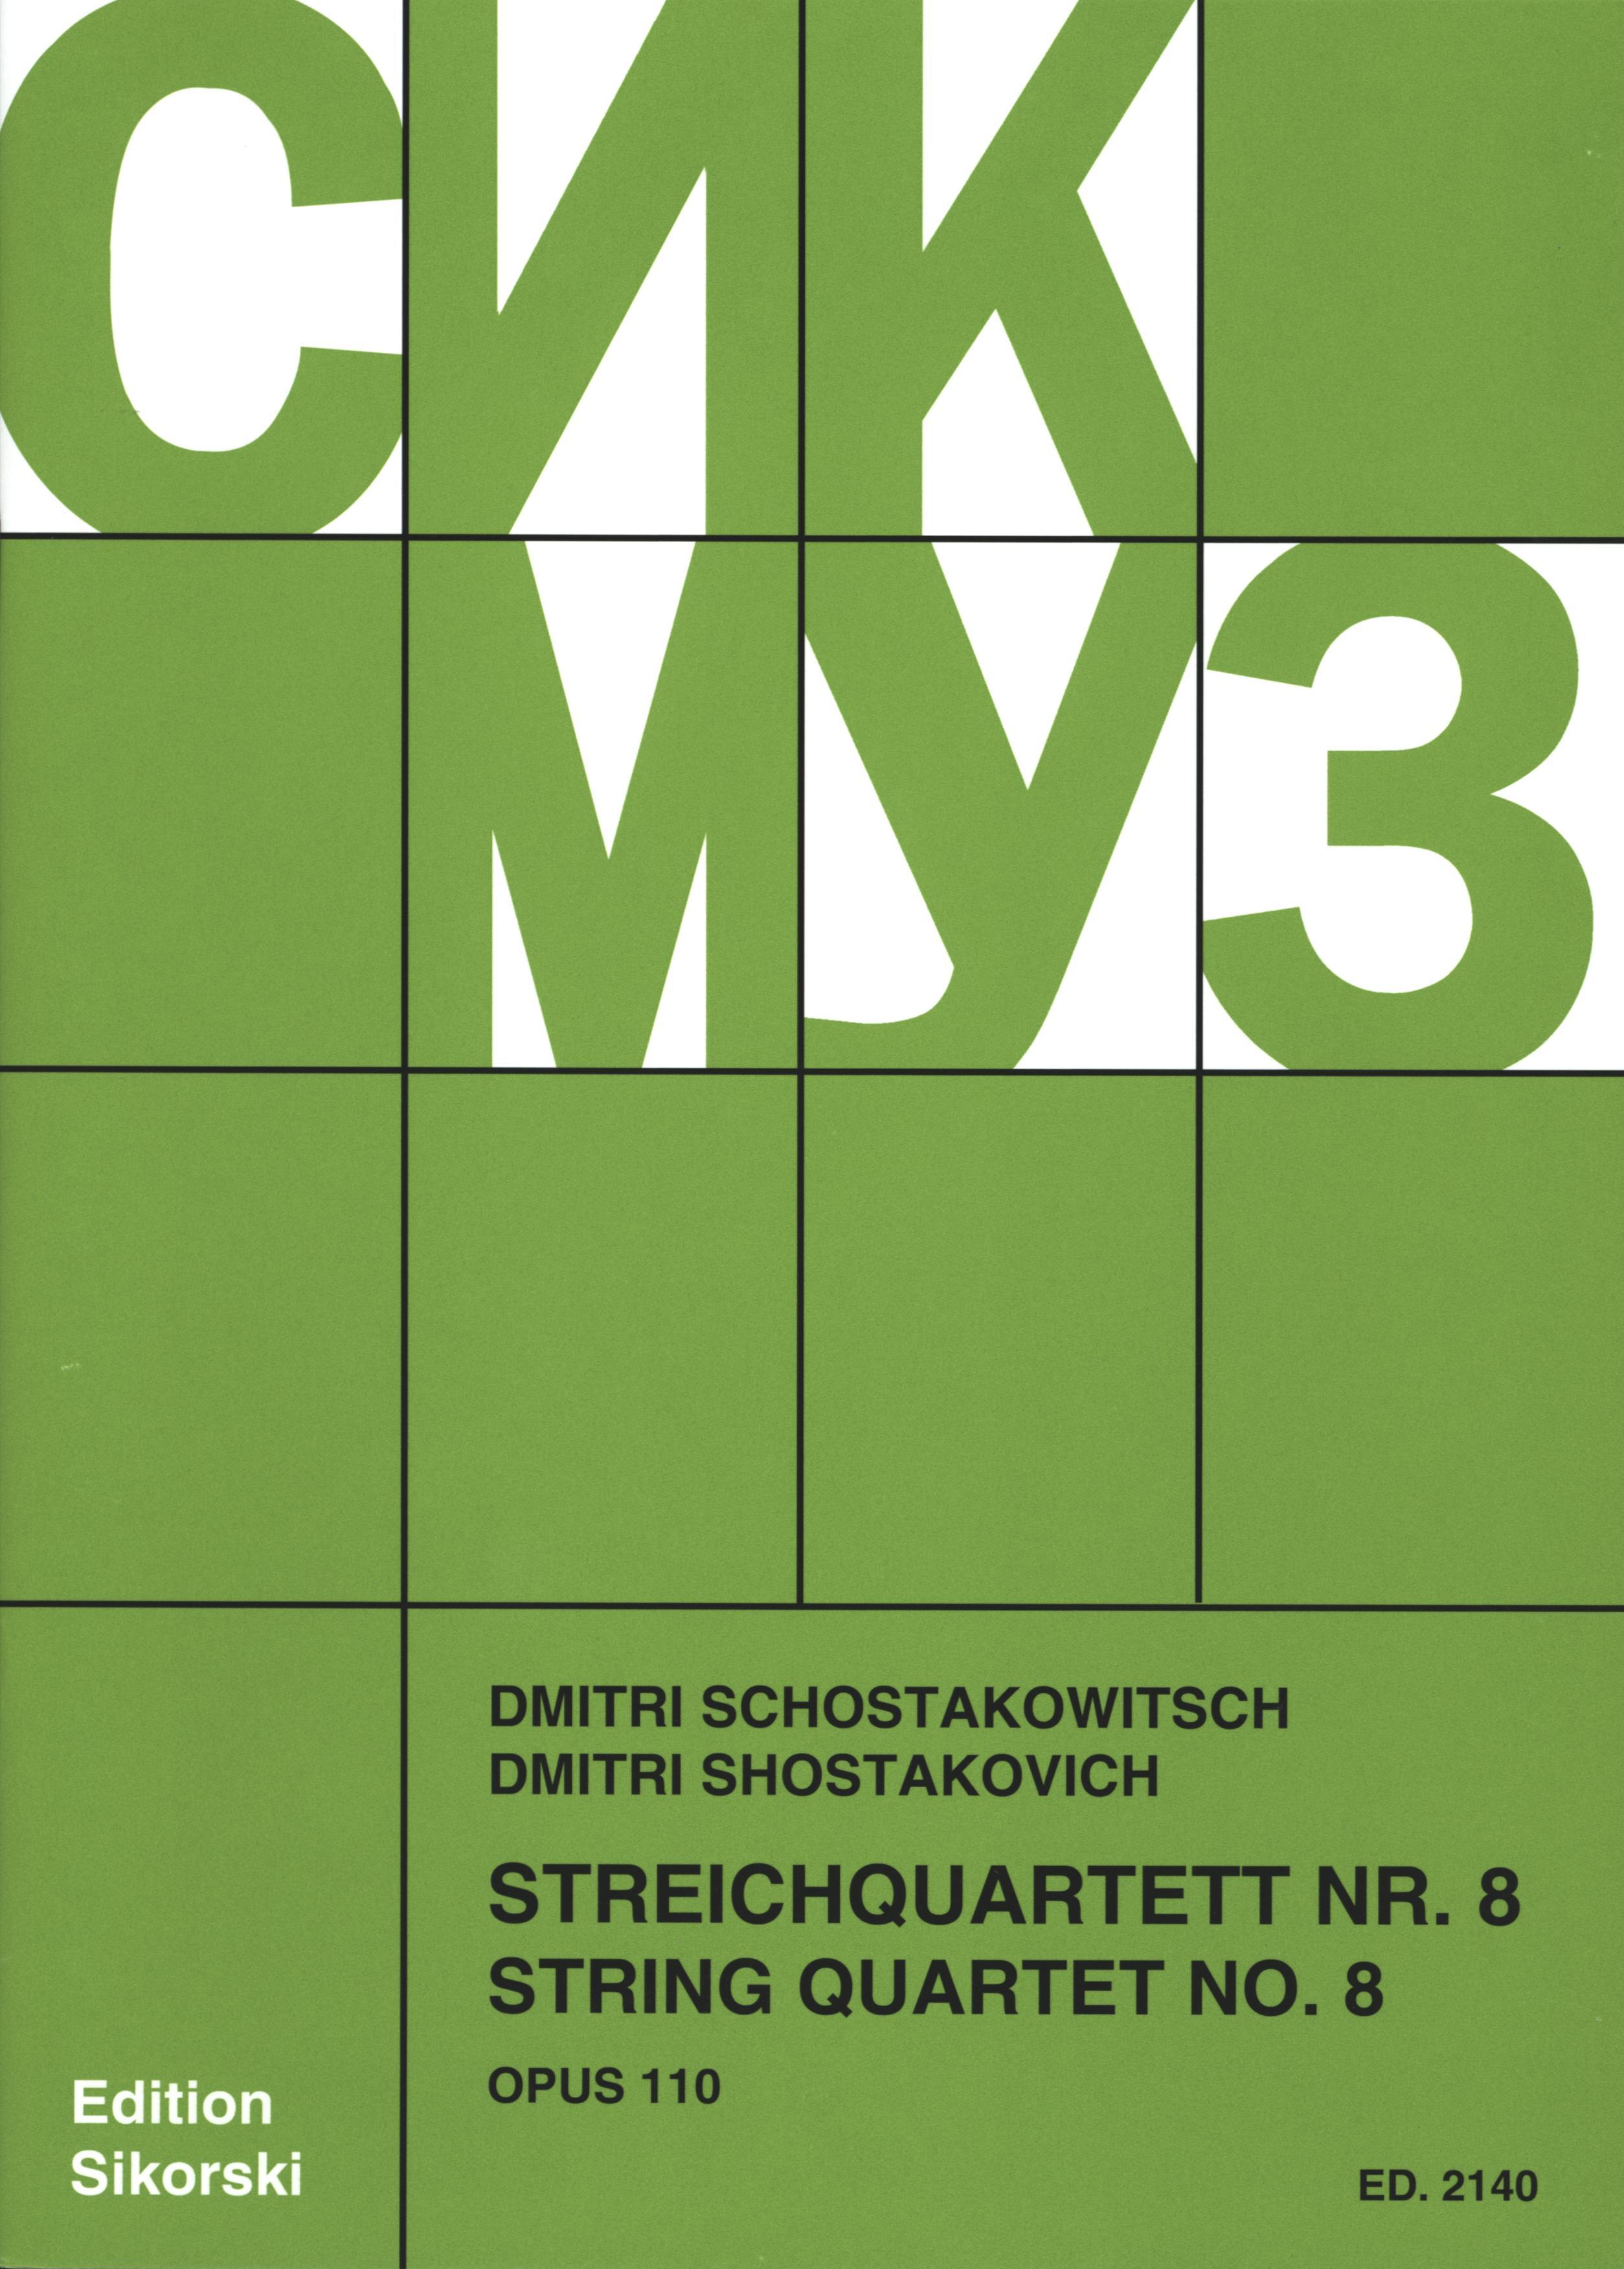 shostakovich string quartet 8 parts pdf